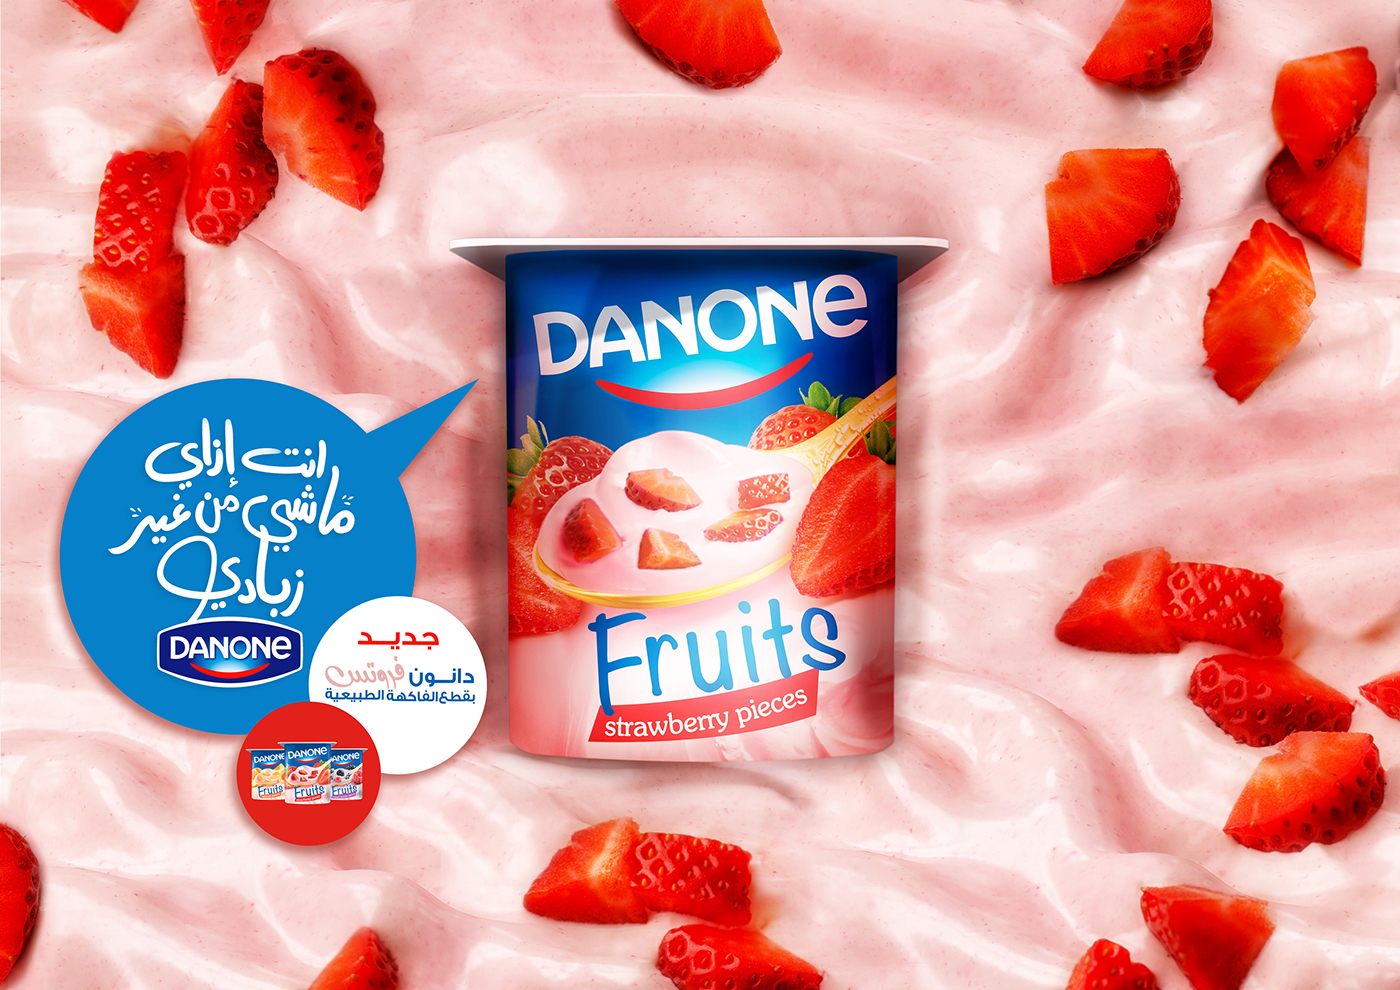 yogurt Danone egypt fruits splash Fly strawberry pieces Circus agency